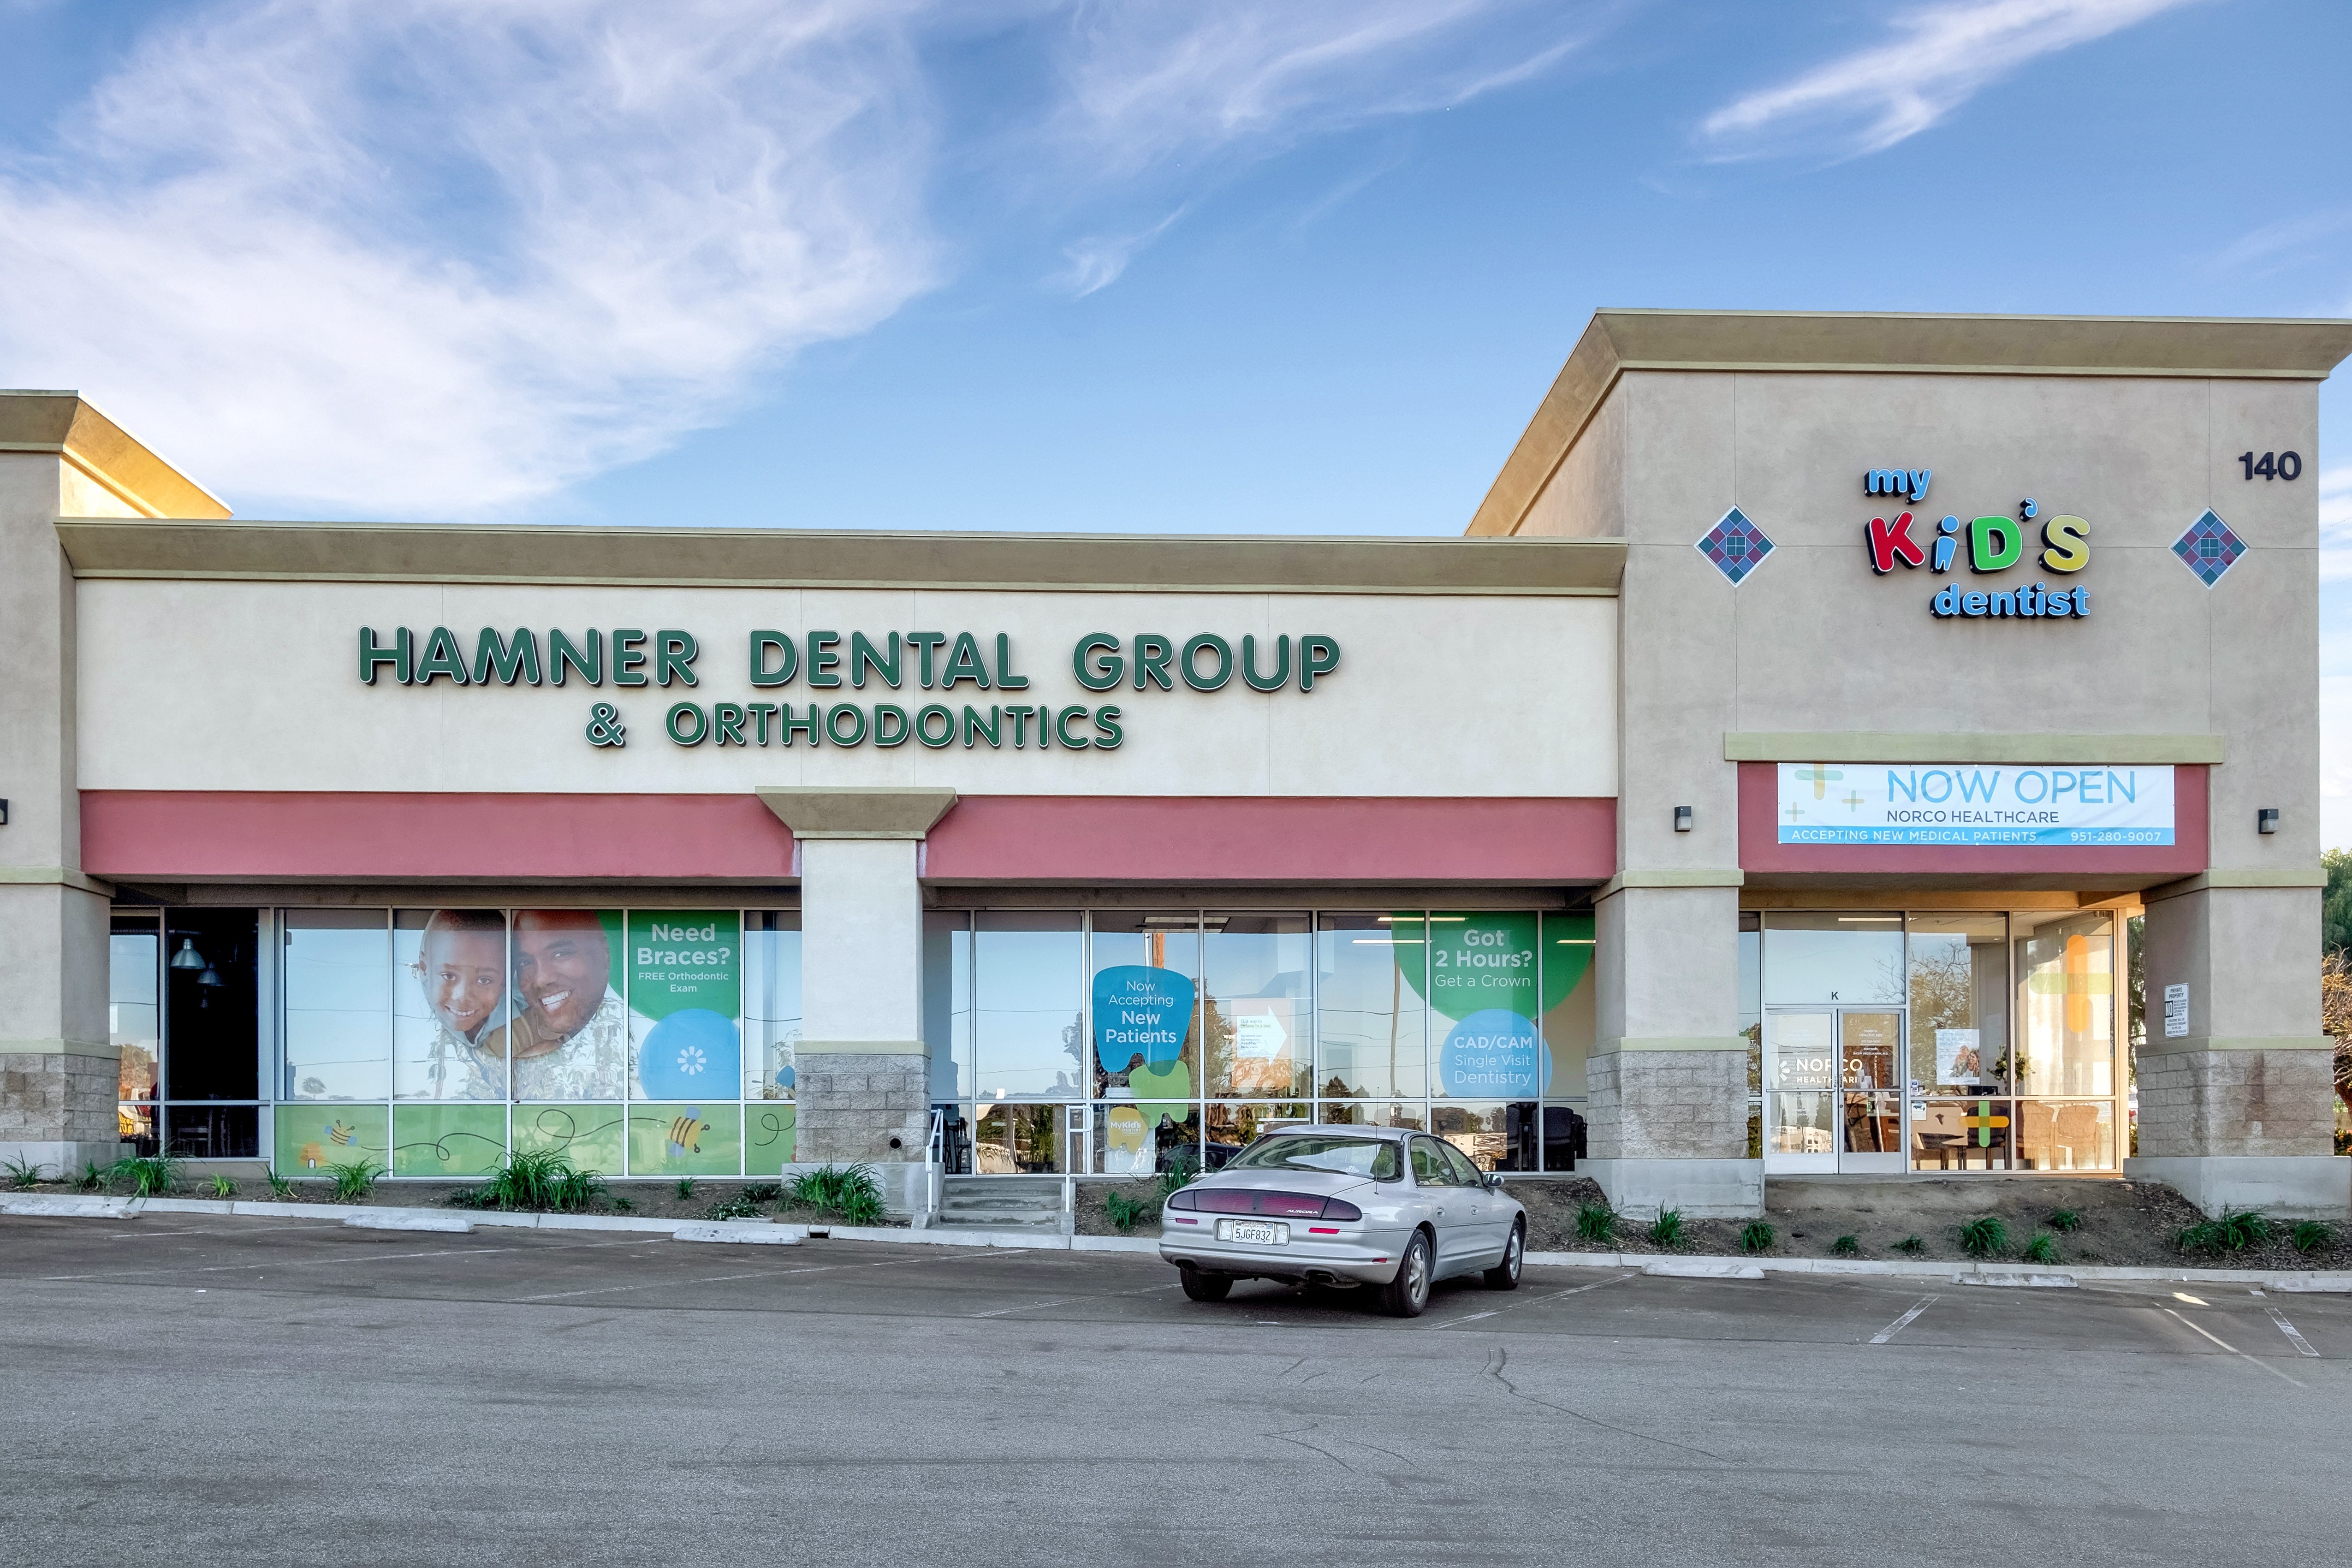 Hamner Dental Group and Orthodontics Photo